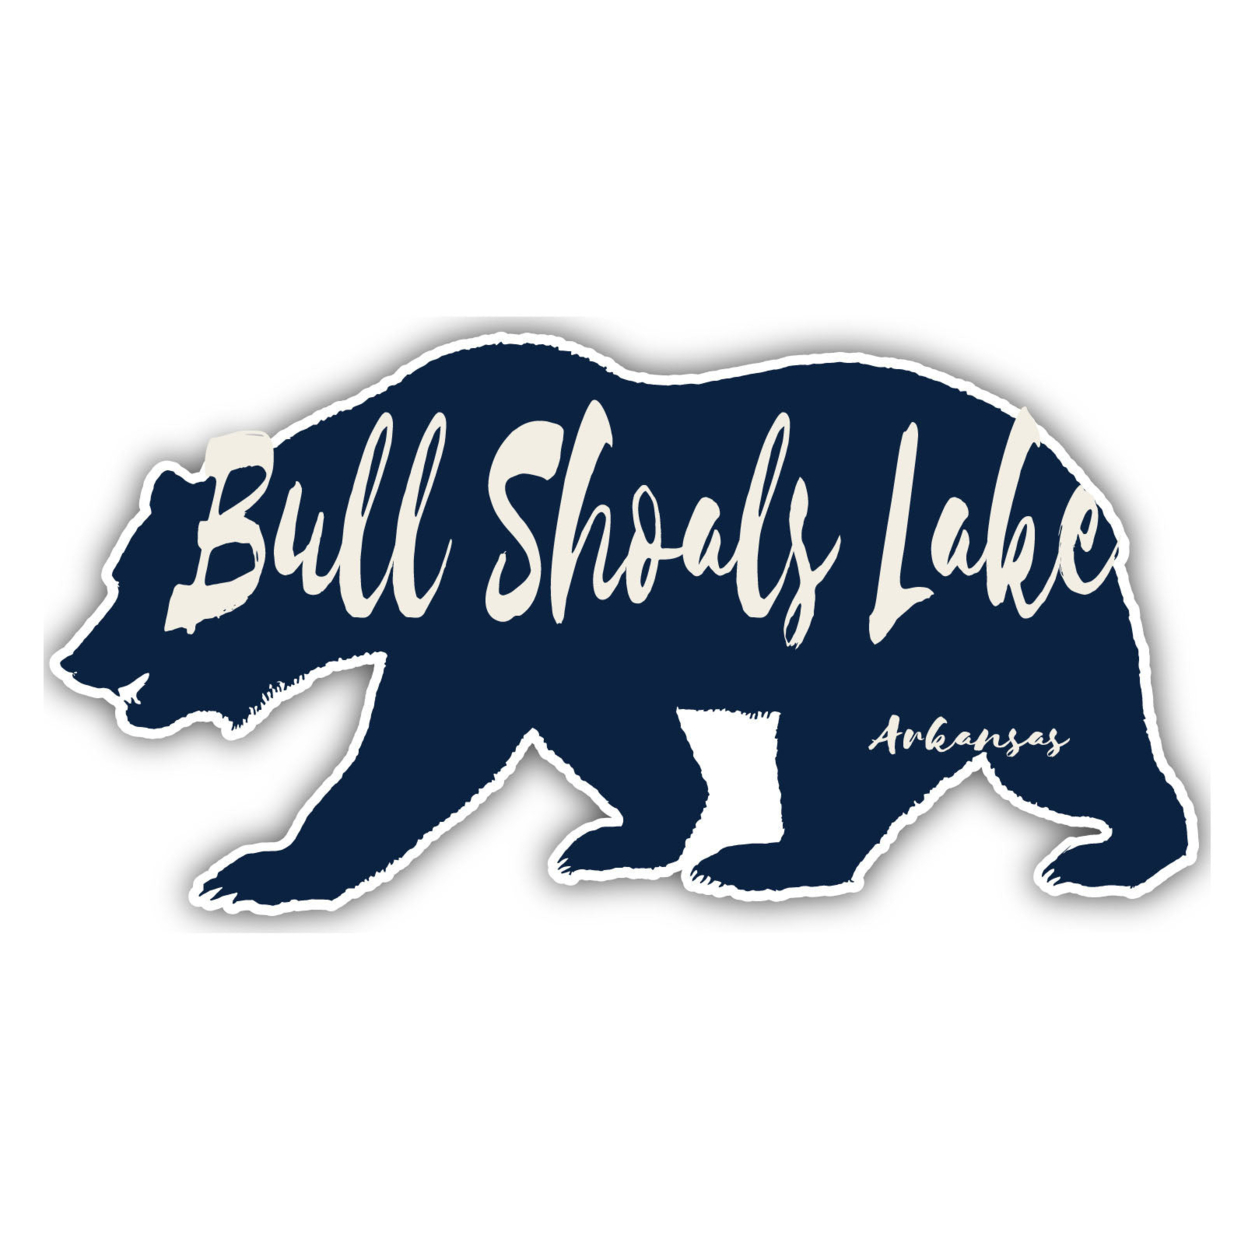 Bull Shoals Lake Arkansas Souvenir Decorative Stickers (Choose Theme And Size) - 4-Pack, 8-Inch, Tent